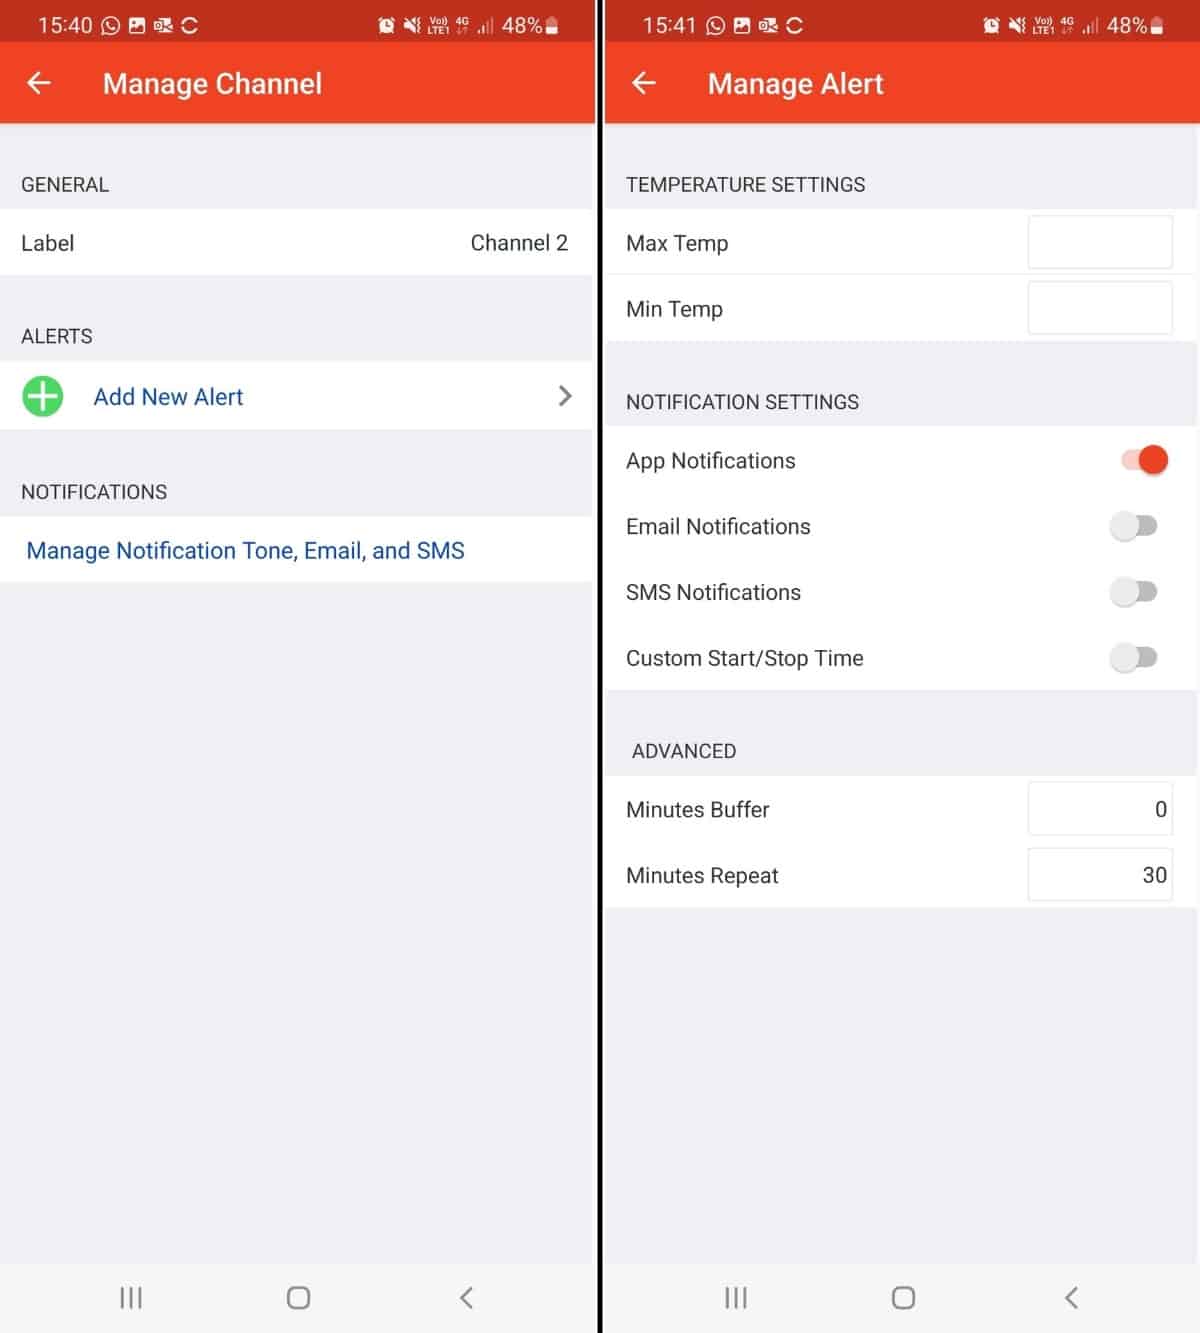 FireBoard app screenshots showing alerts settings screens